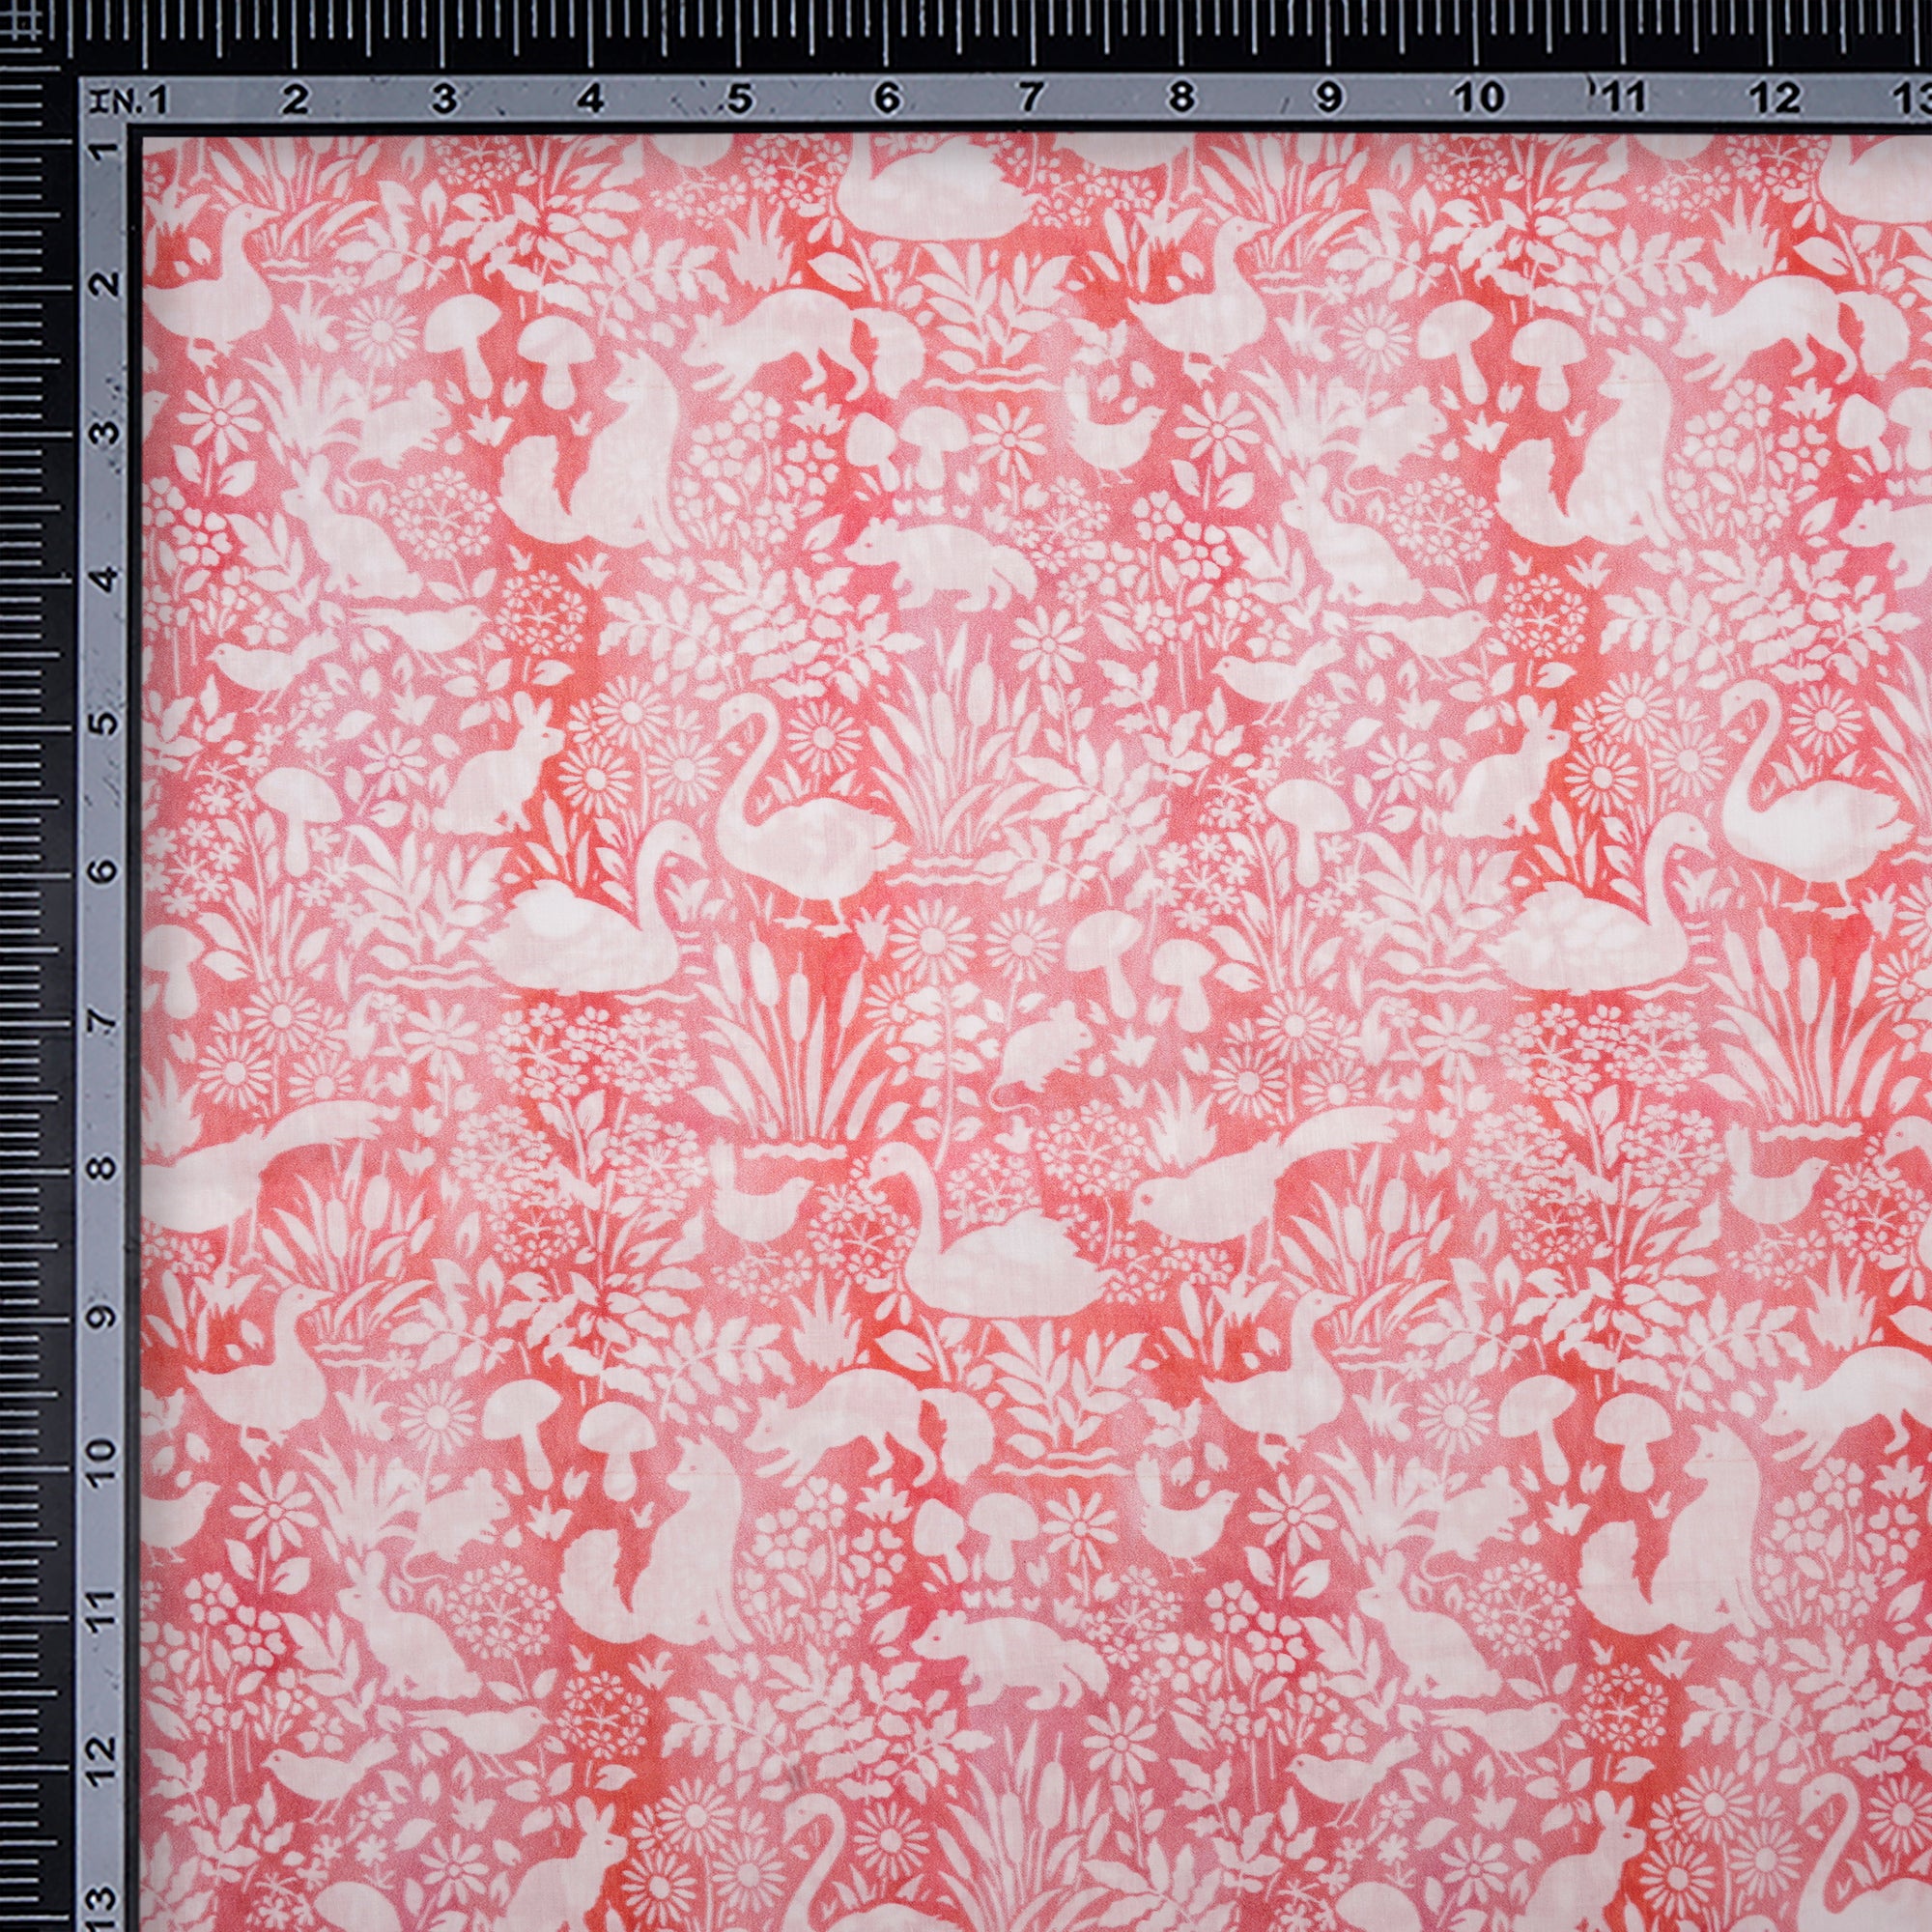 Murex Shell Tropical Pattern Digital Print Lawn Cotton Fabric